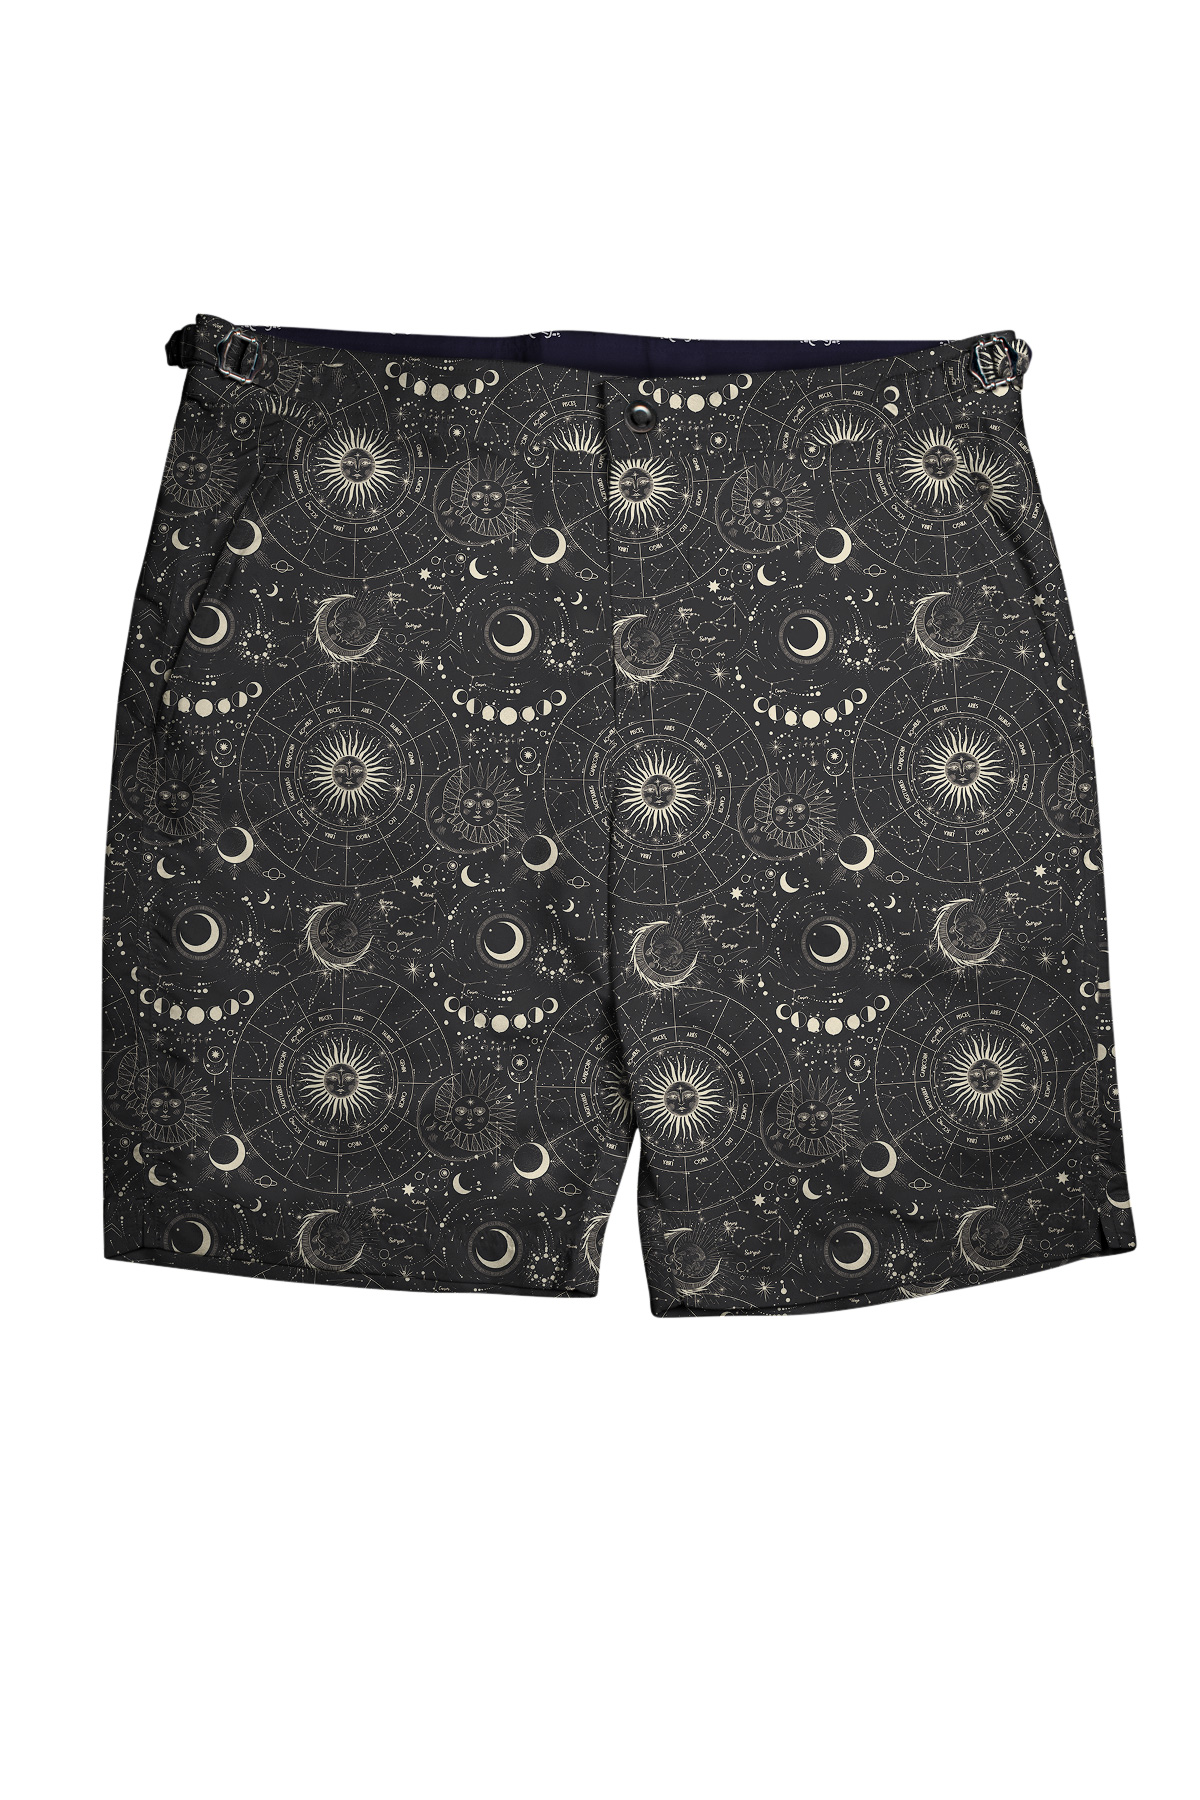 Astrological Swim Shorts